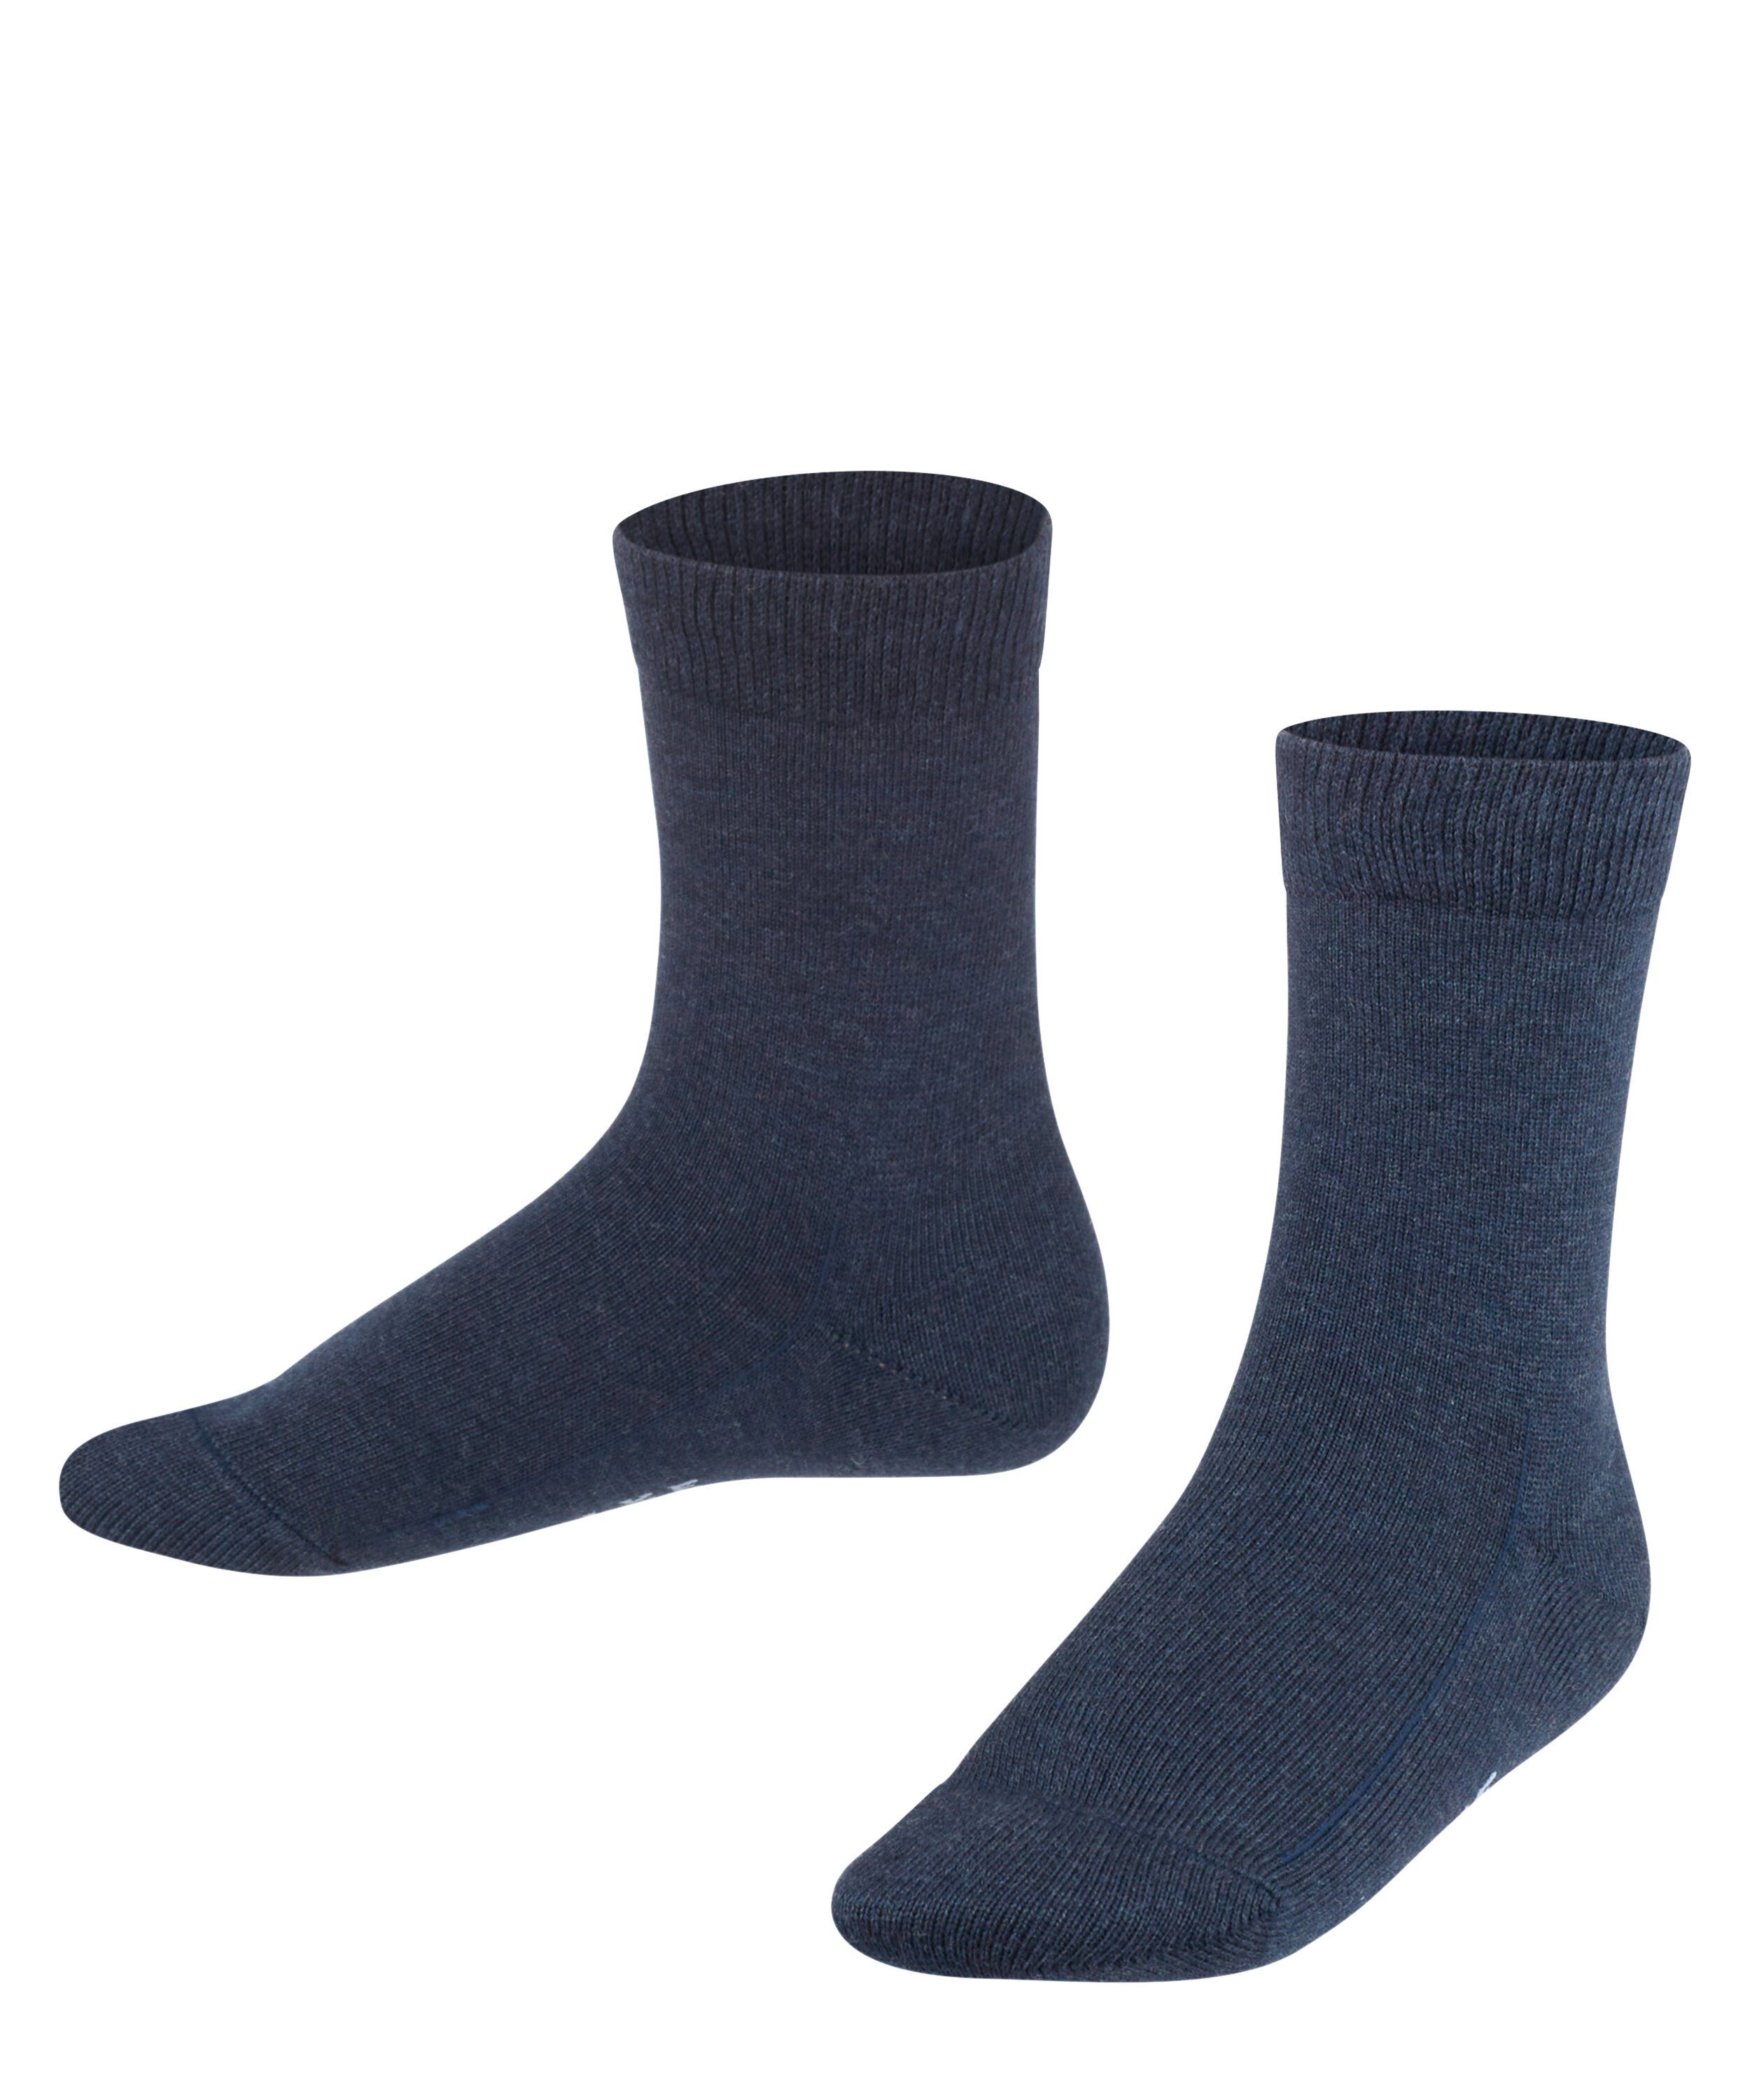 FALKE Socken Family (1-Paar) navyblue m (6490)